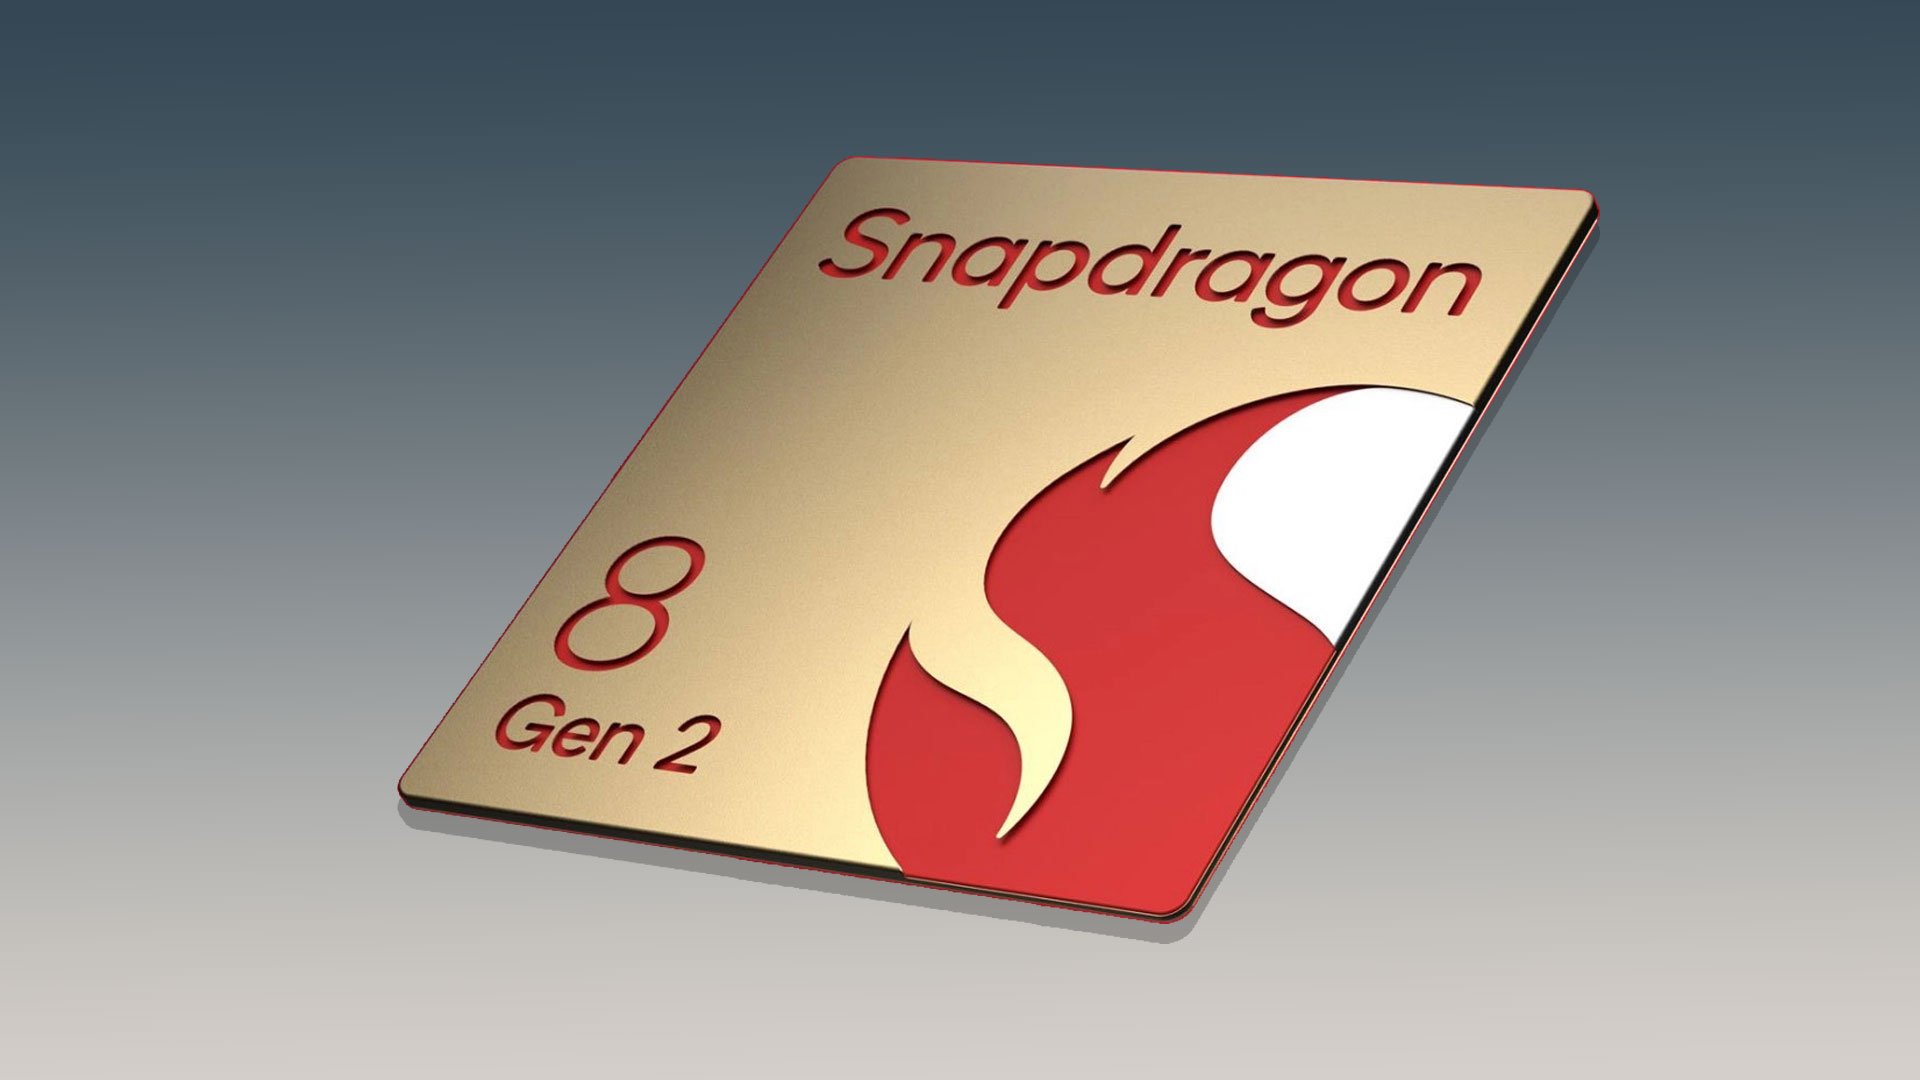 Qualcomm-Snapdragon-8-Gen-2-benchmark-results-surface-online